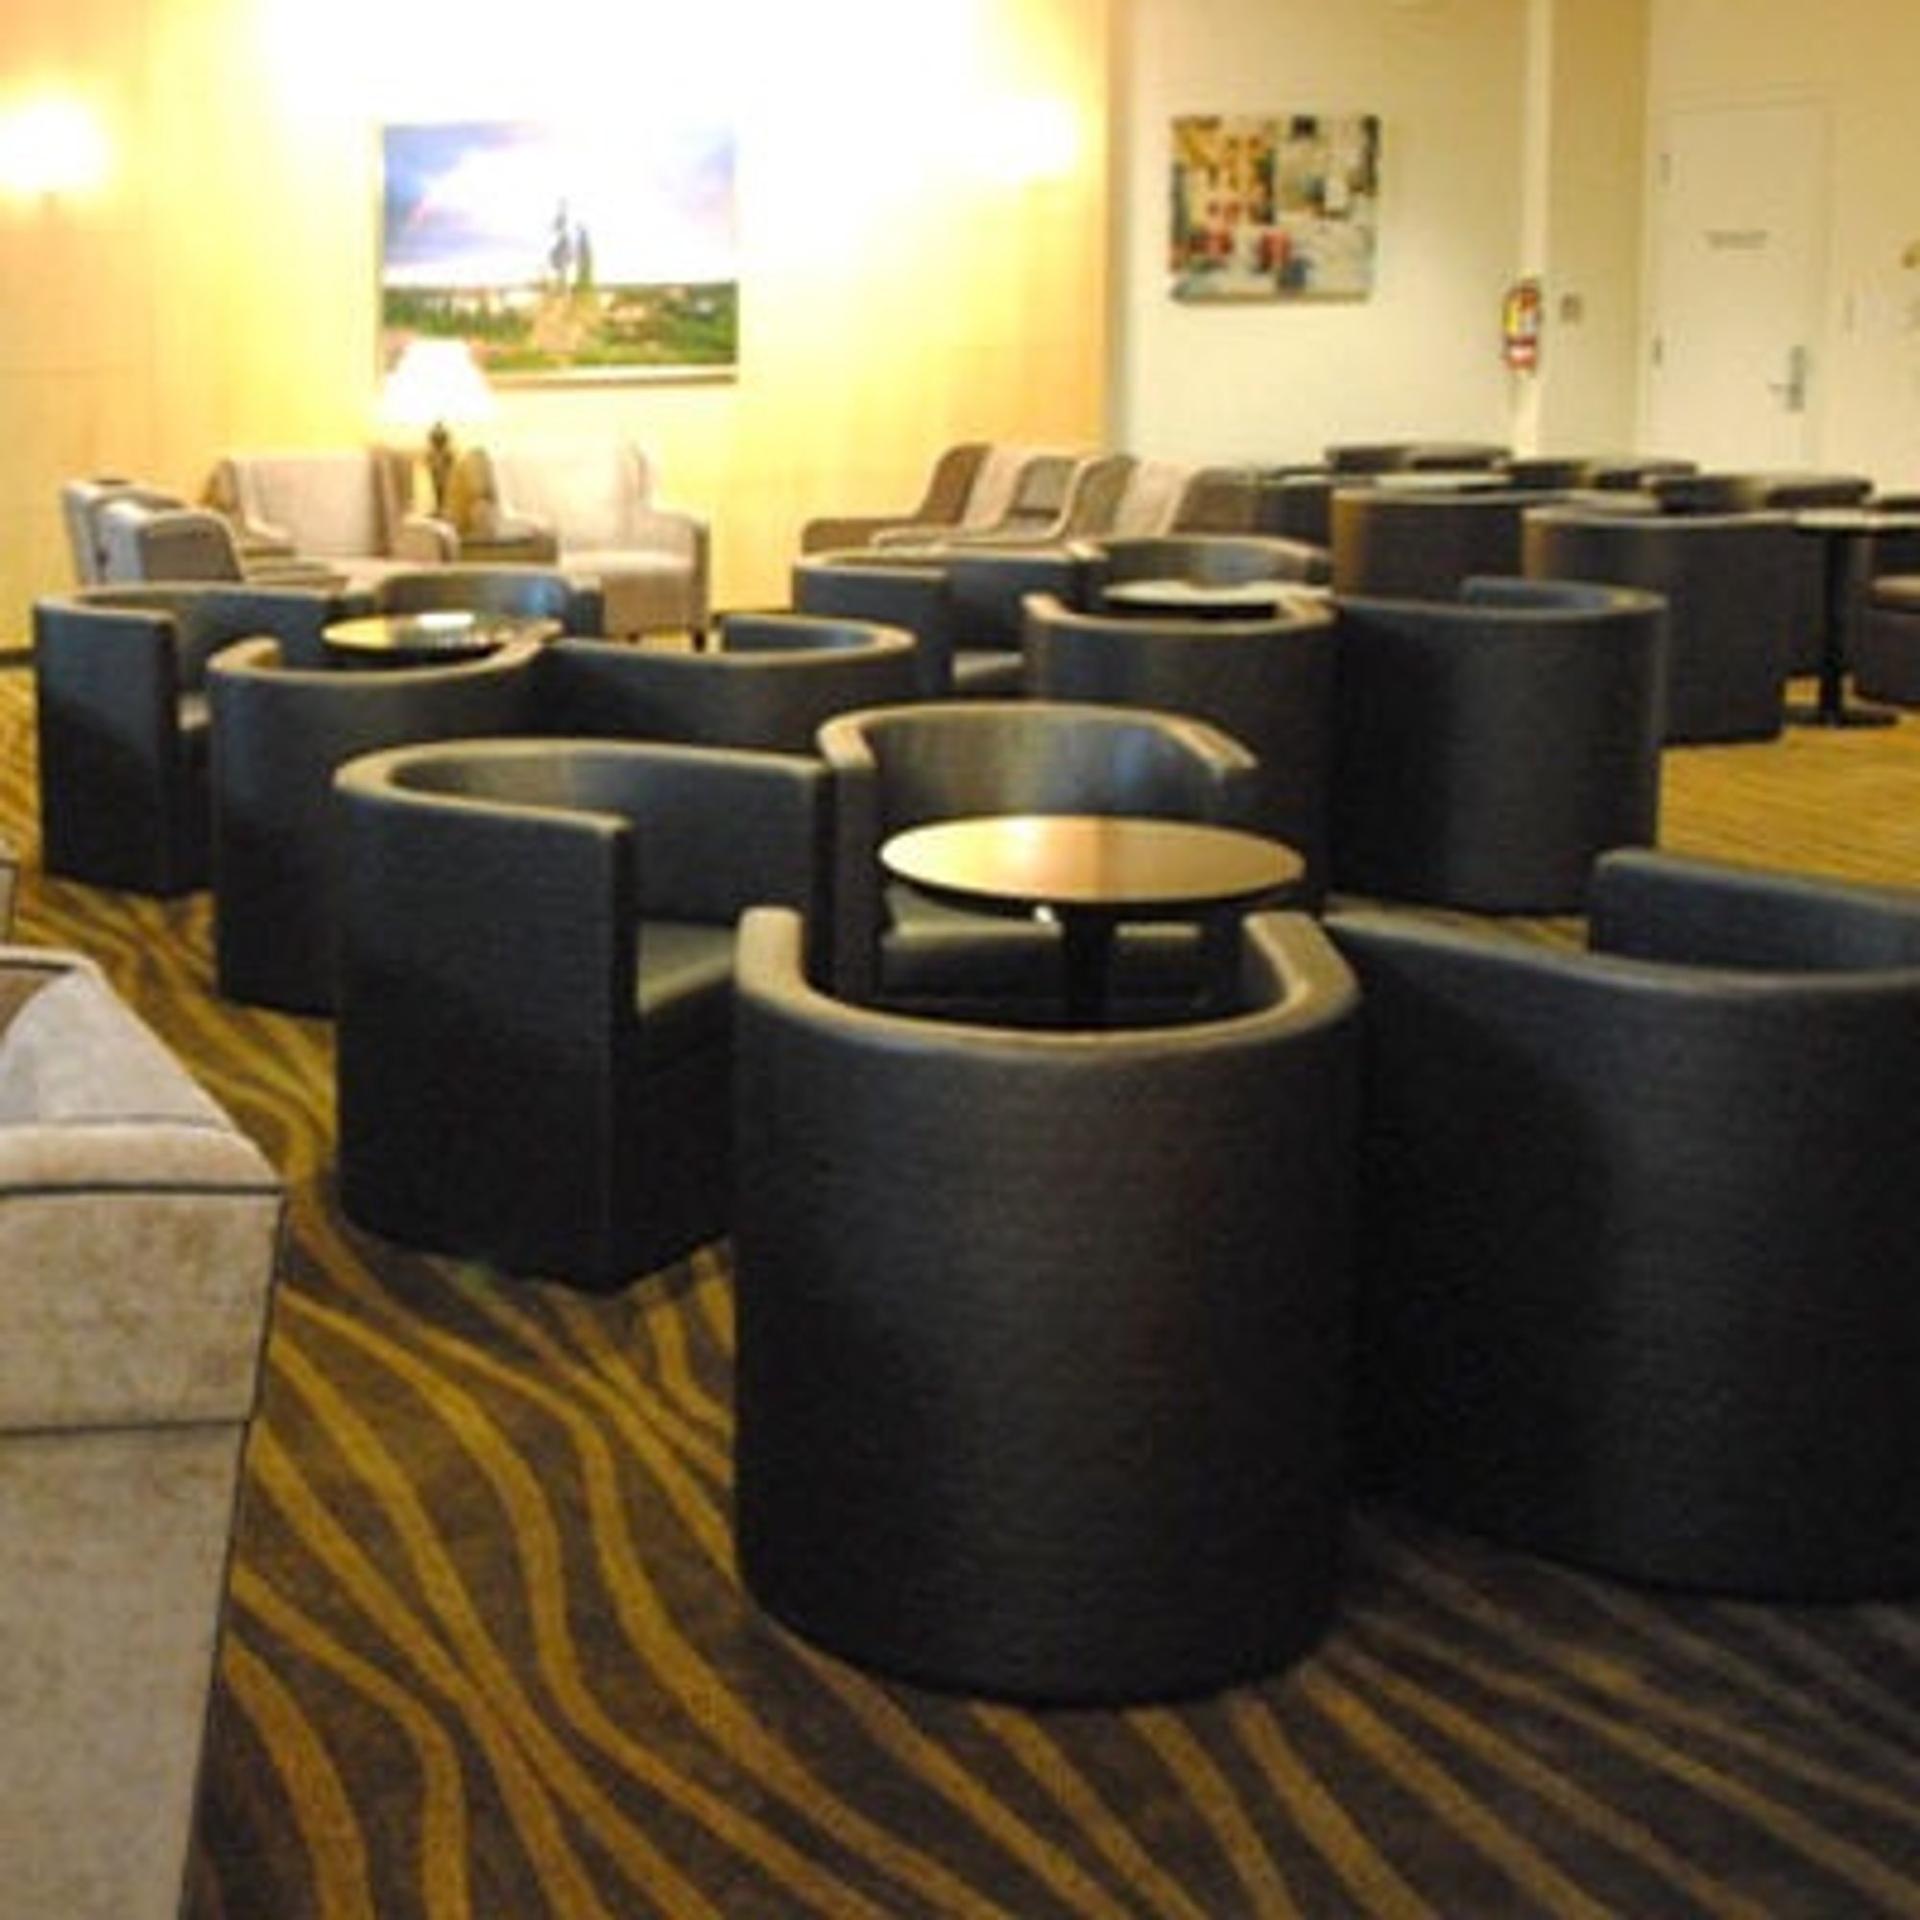 Plaza Premium Lounge image 13 of 57